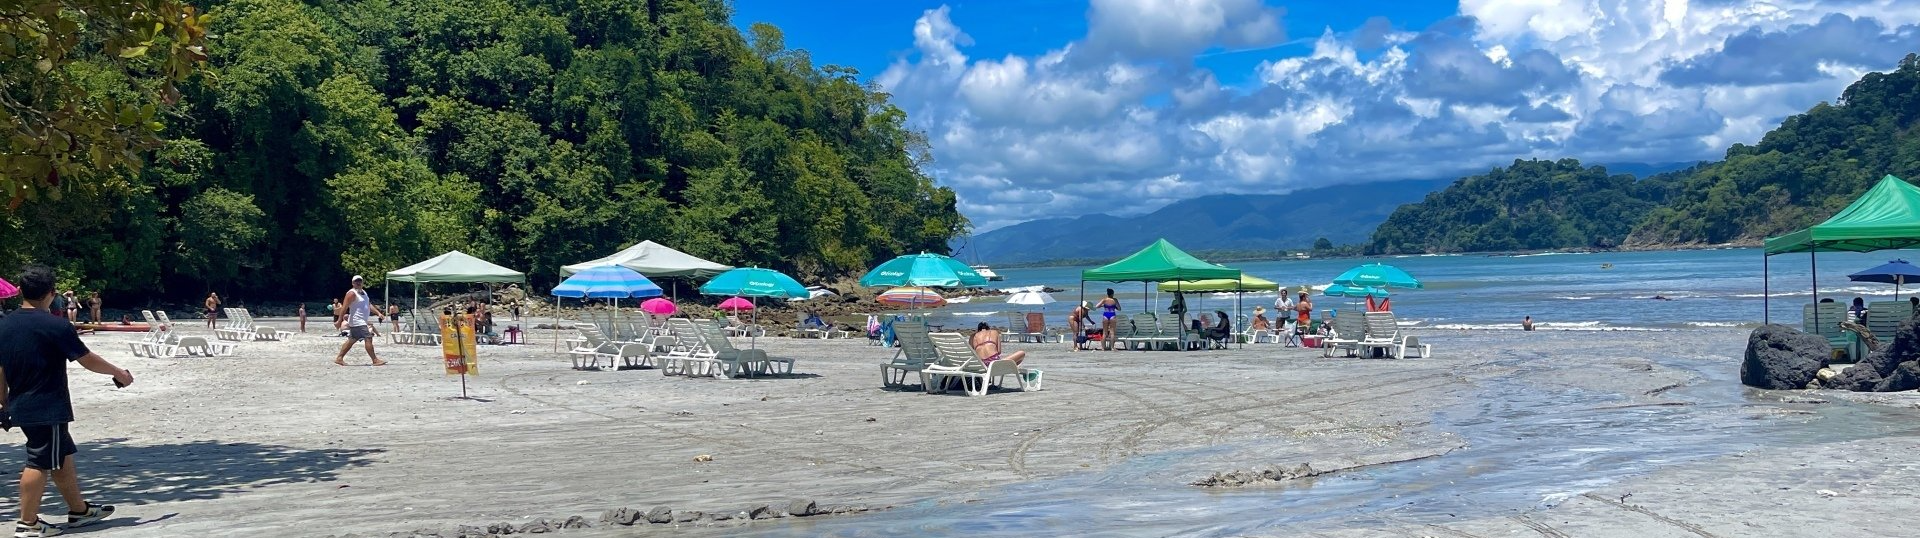 Top 5 Beaches in Manuel Antonio - Playa Biesanz